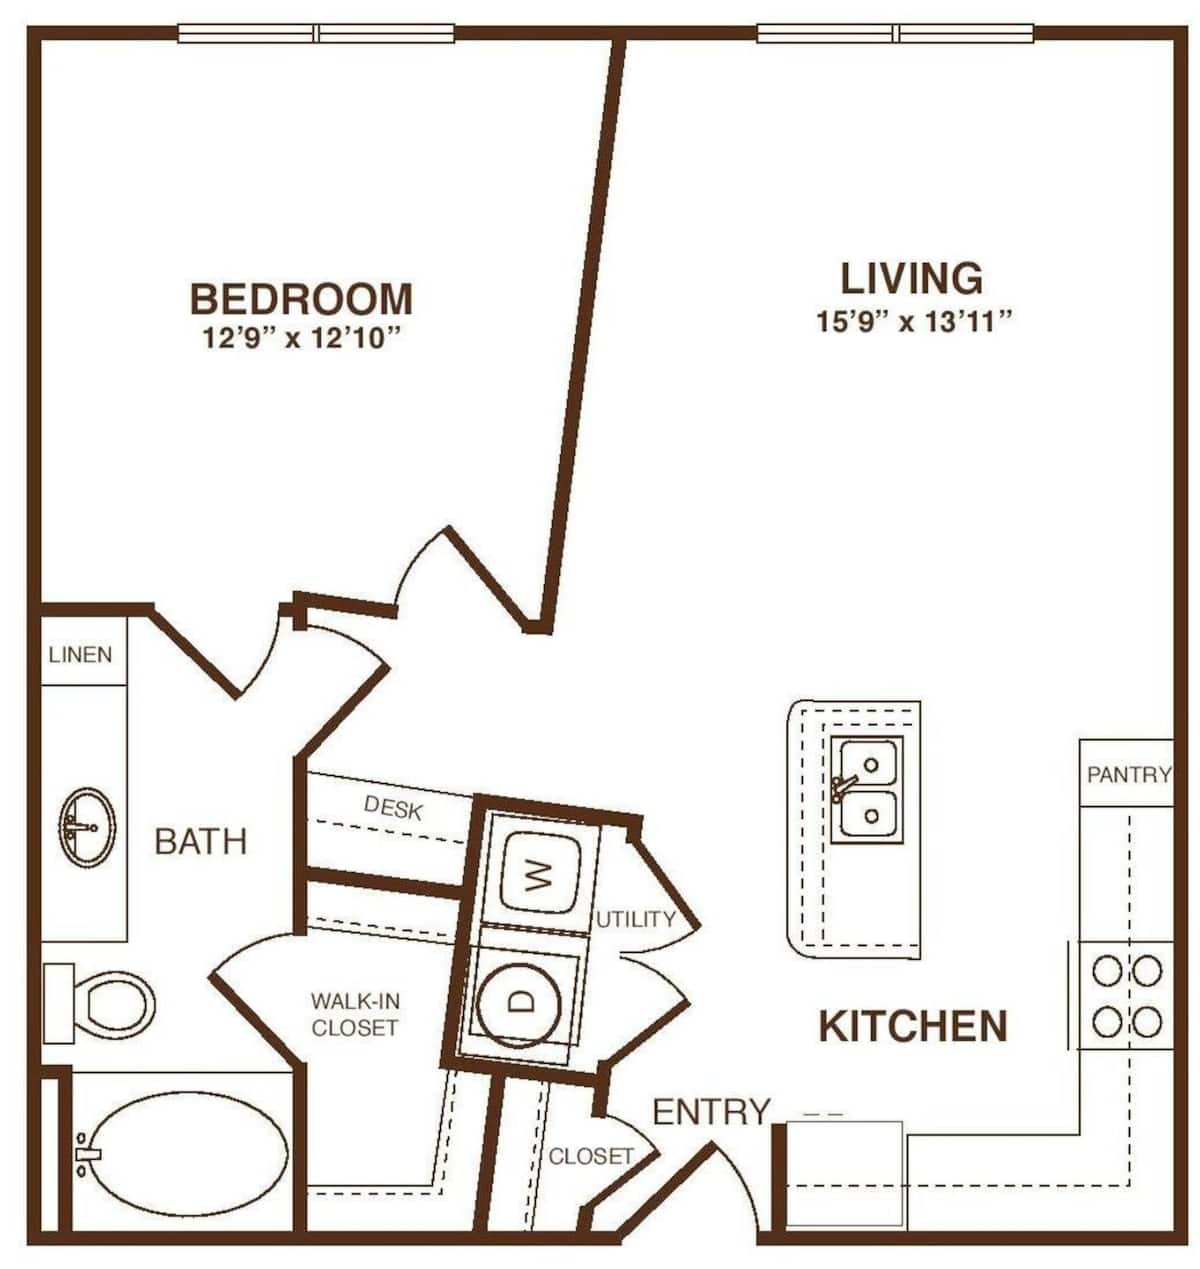 Floorplan diagram for The Mayfair, showing 1 bedroom